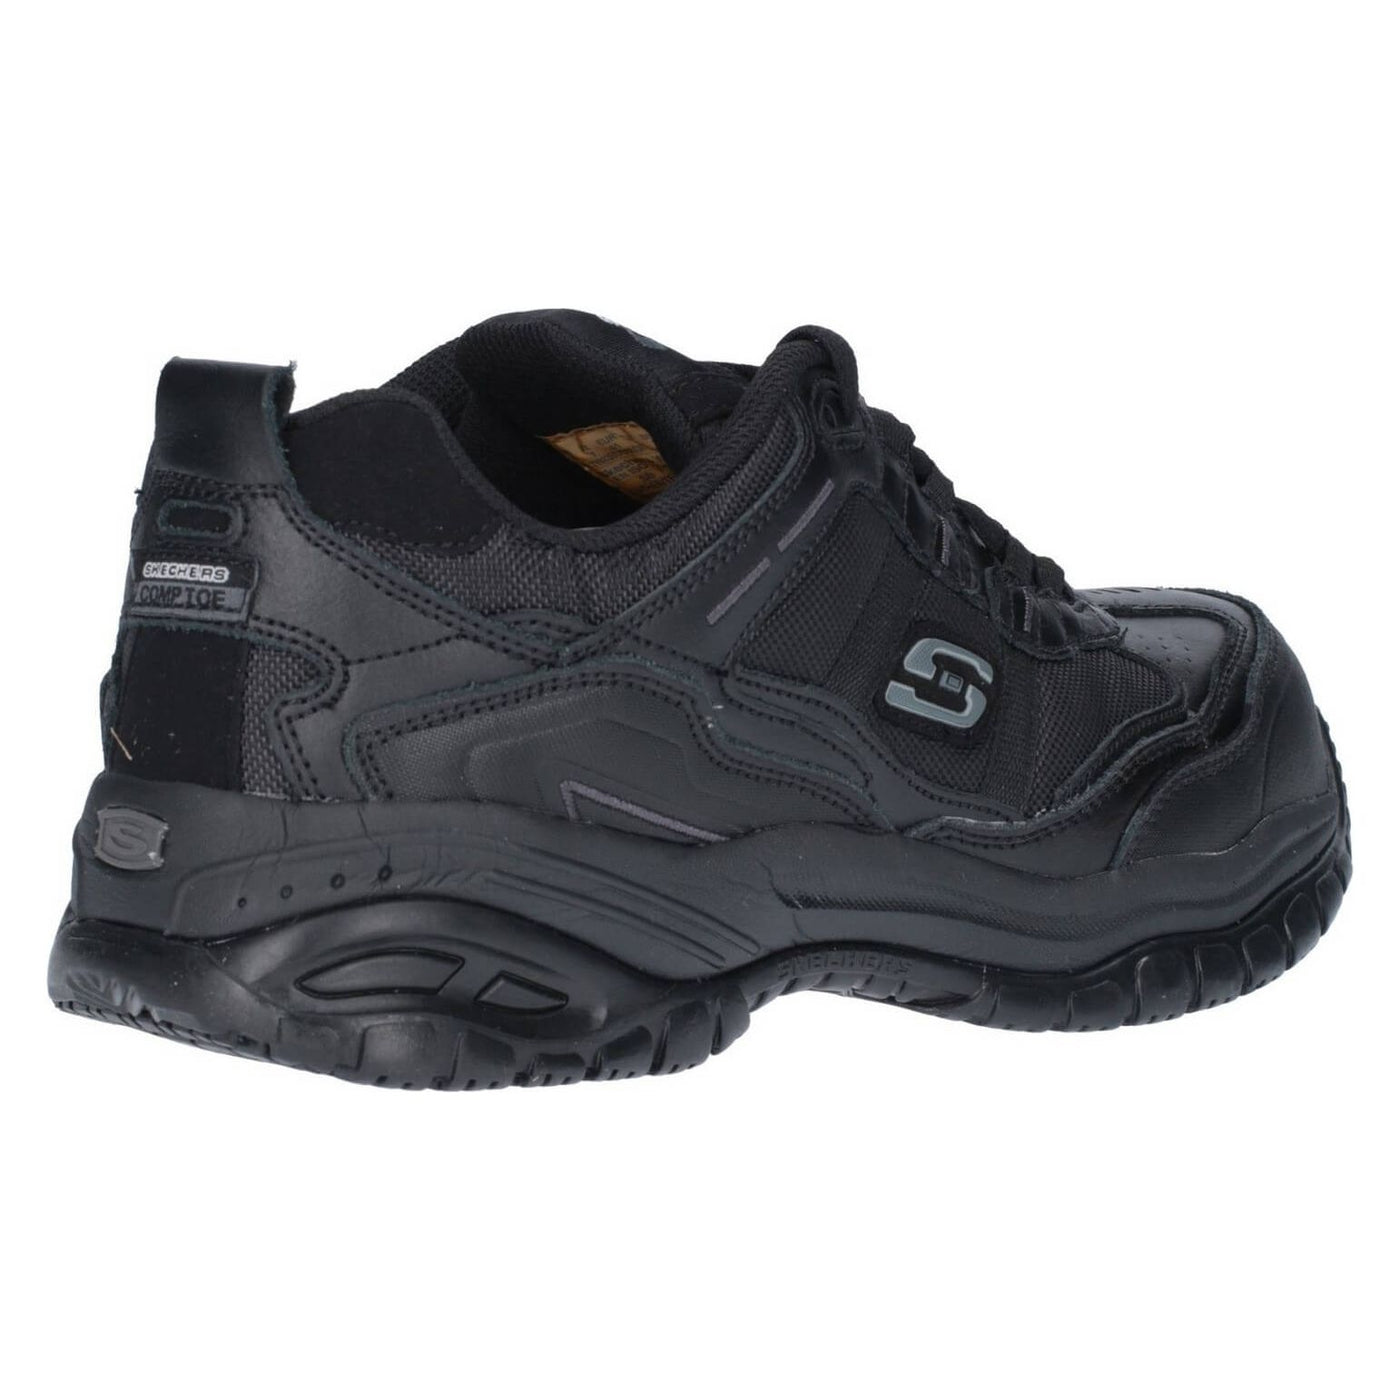 Skechers Grinnell Soft Stride Safety Shoes-Black-2